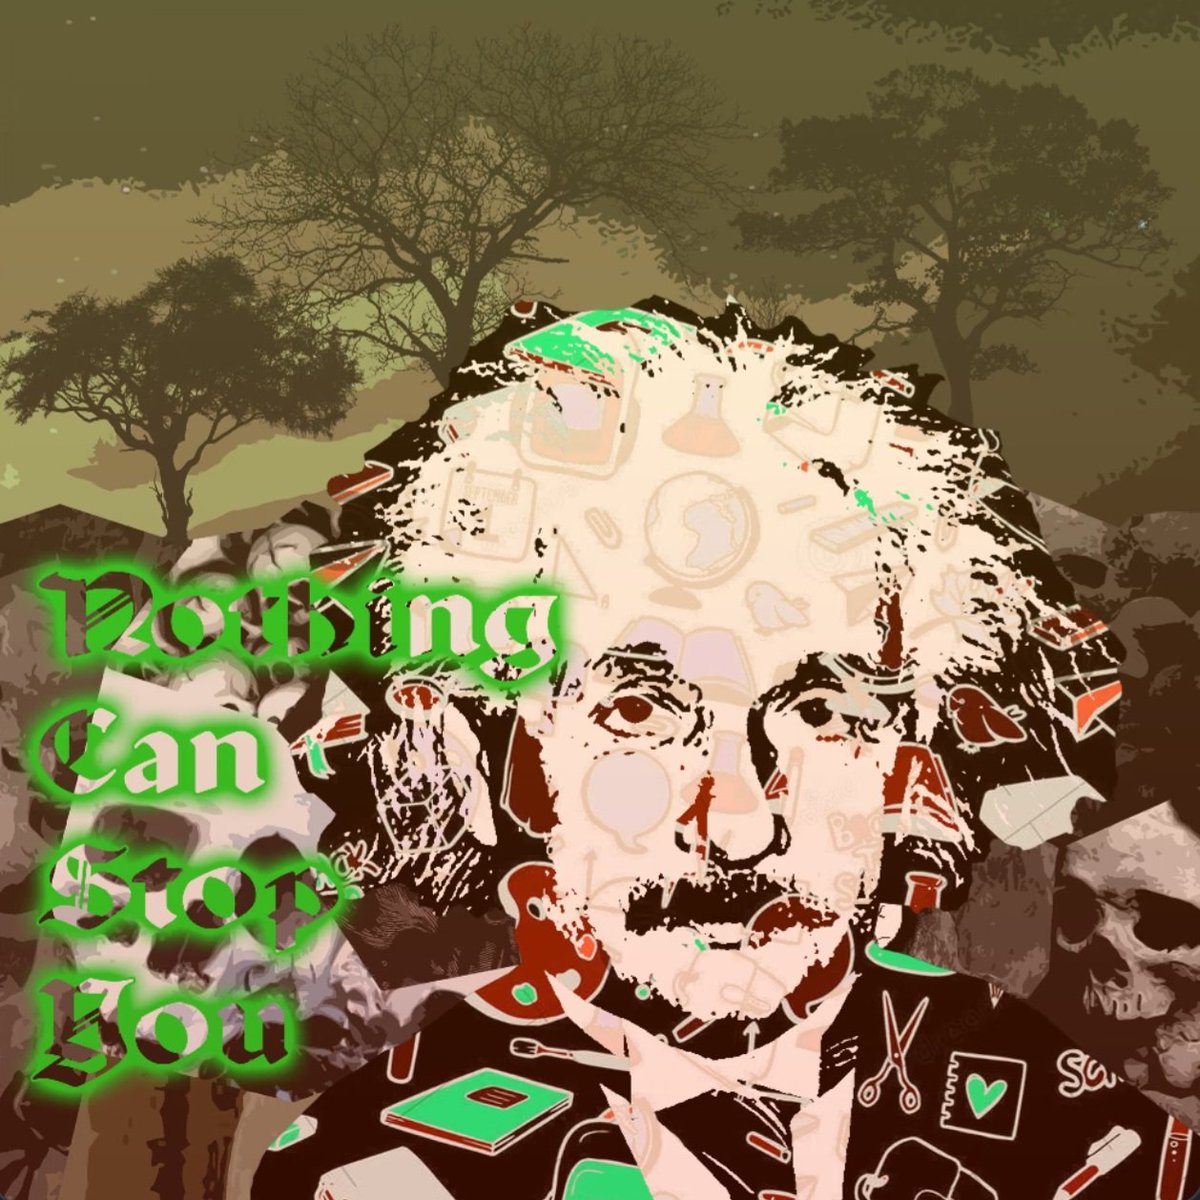 RT @Beuks605: Grabbed some @w3bscholars, Albert Einstein is one of my top 10 interesting/favorite people. https://t.co/AFXM2JEuqh